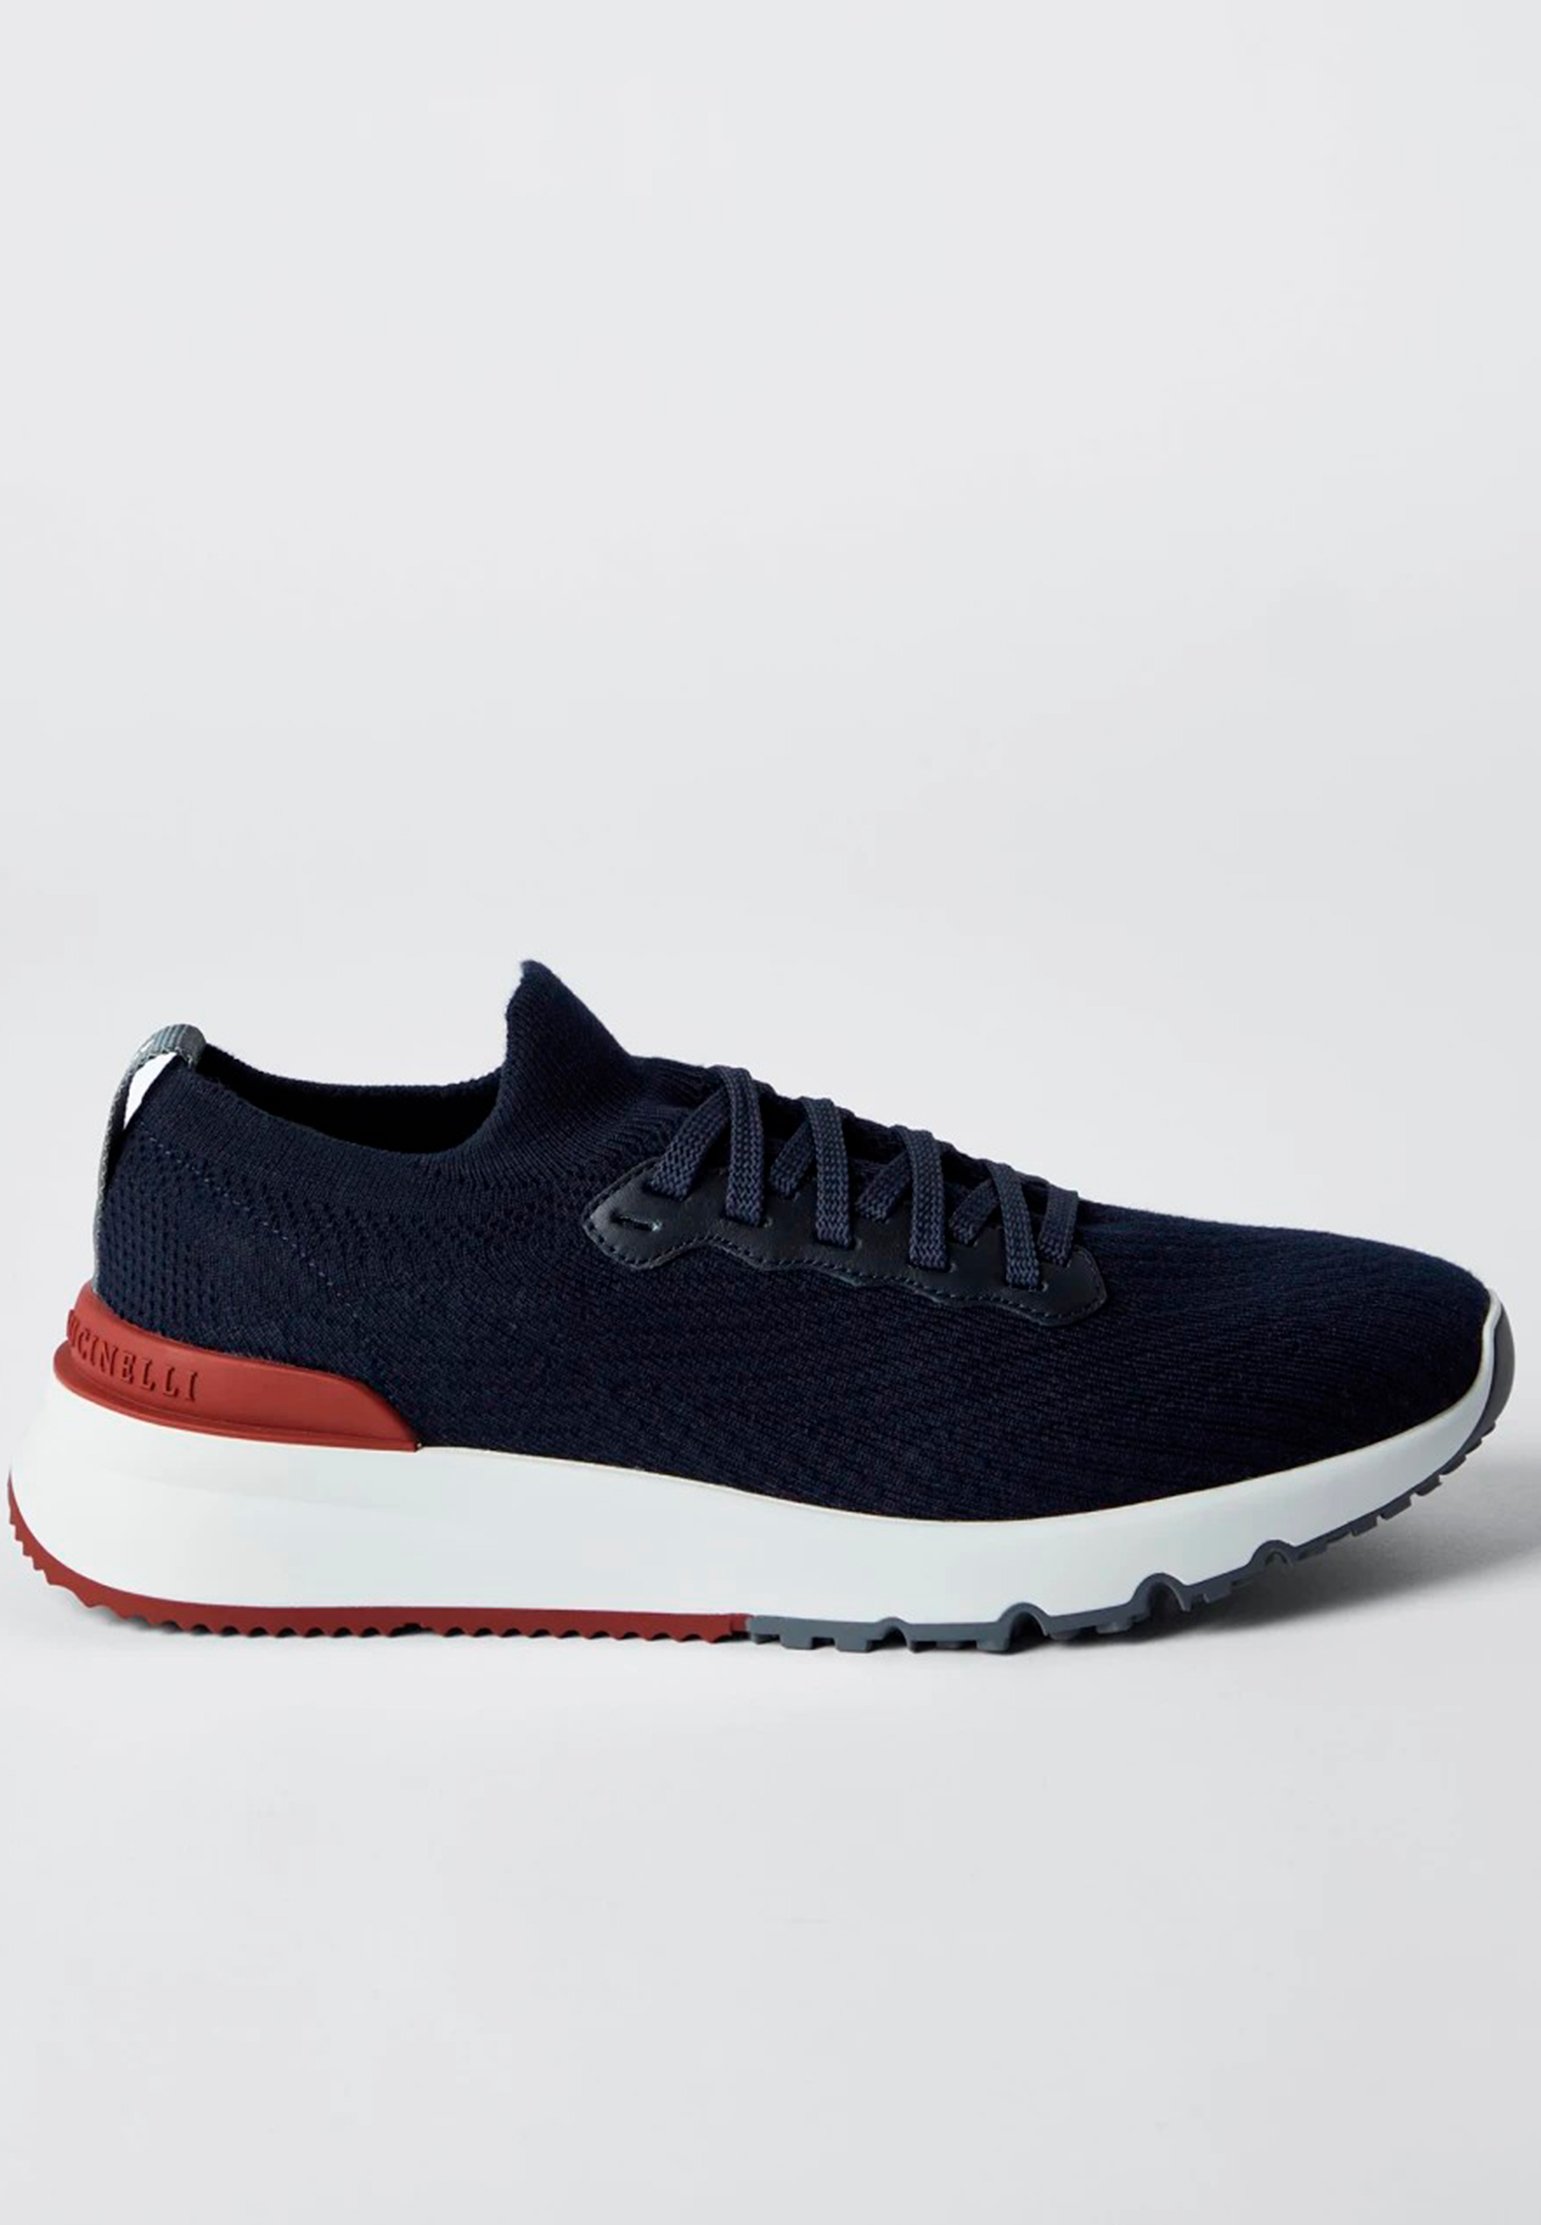 Shoes BRUNELLO CUCINELLI Color: blue (Code: 4226) in online store Allure